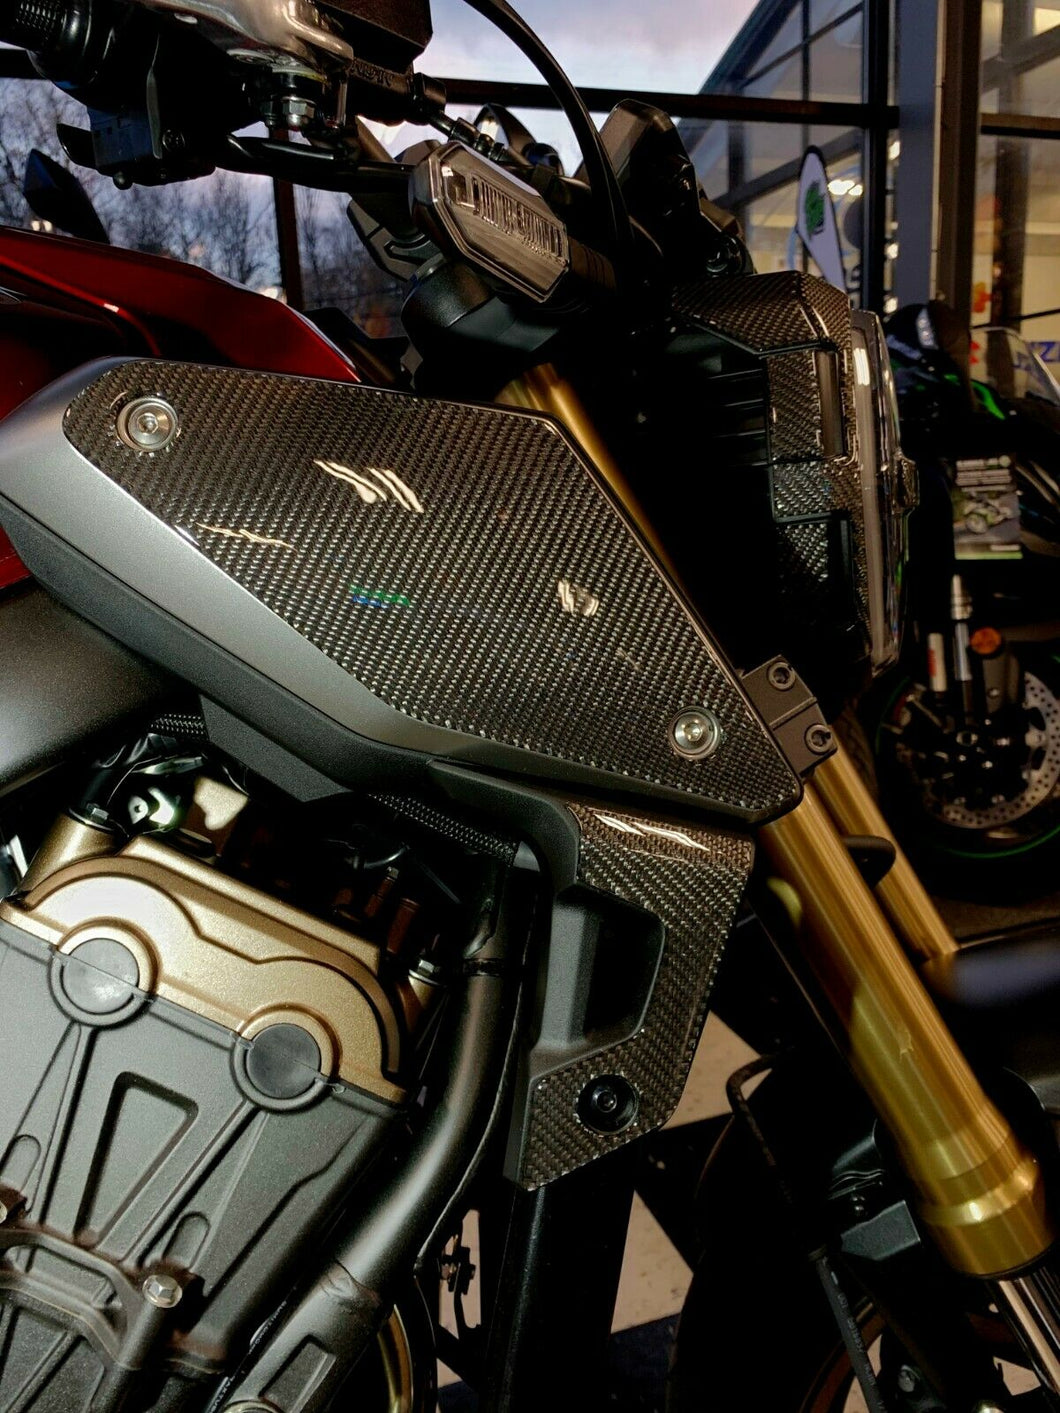 Real Dry carbon fiber Fit Honda CB650R sides tank air inlets cover pad Trim